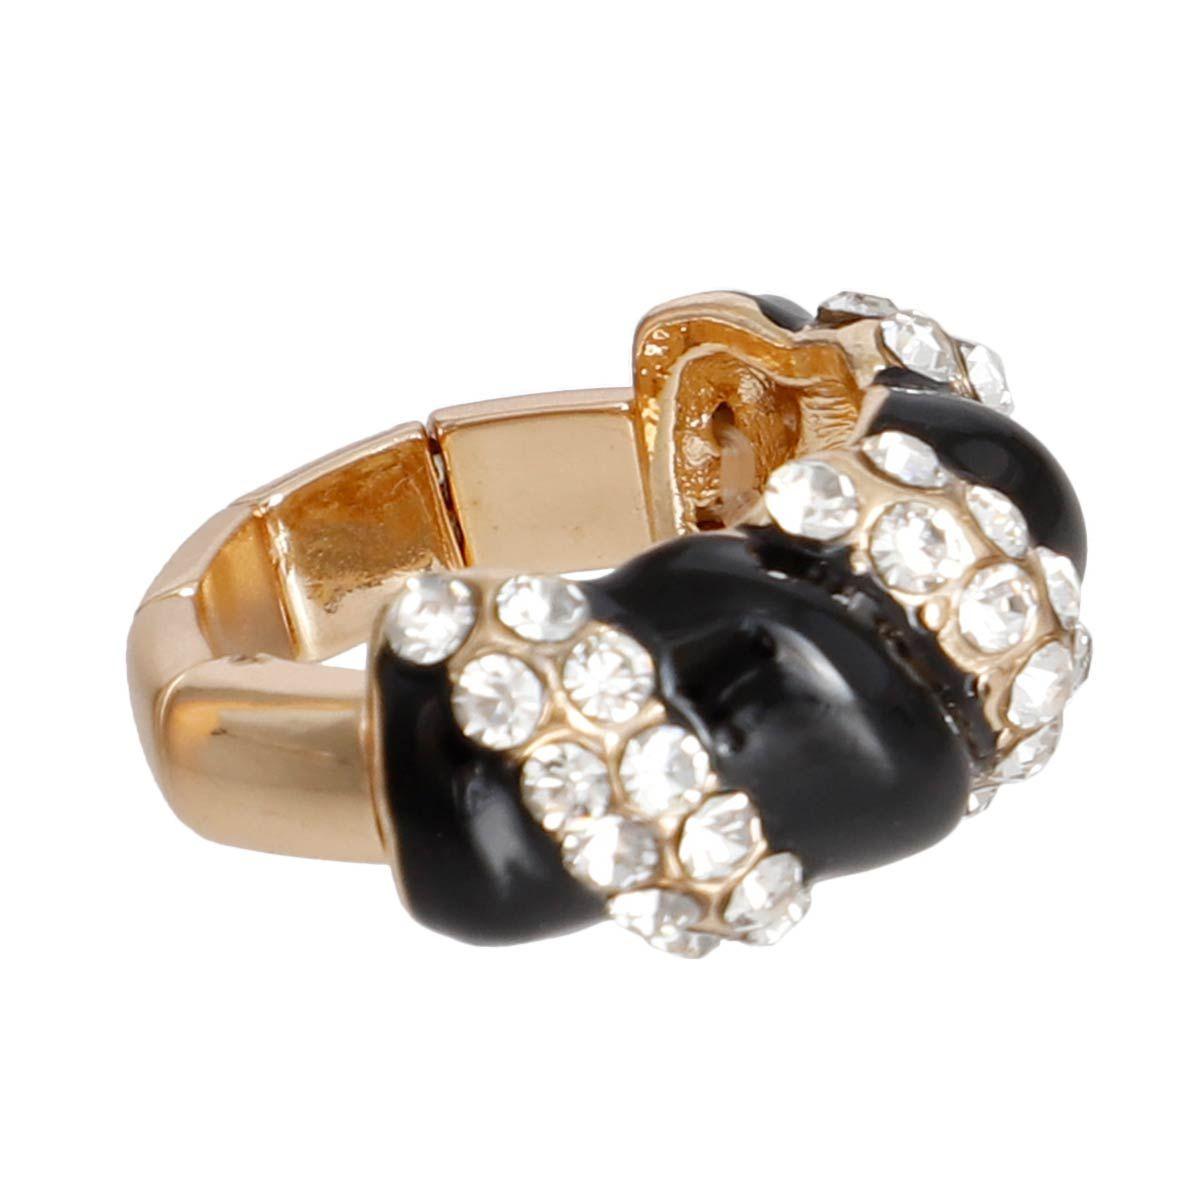 Stylish Gold and Black Rhinestone Twisted Design Ring - Fashion Jewelry